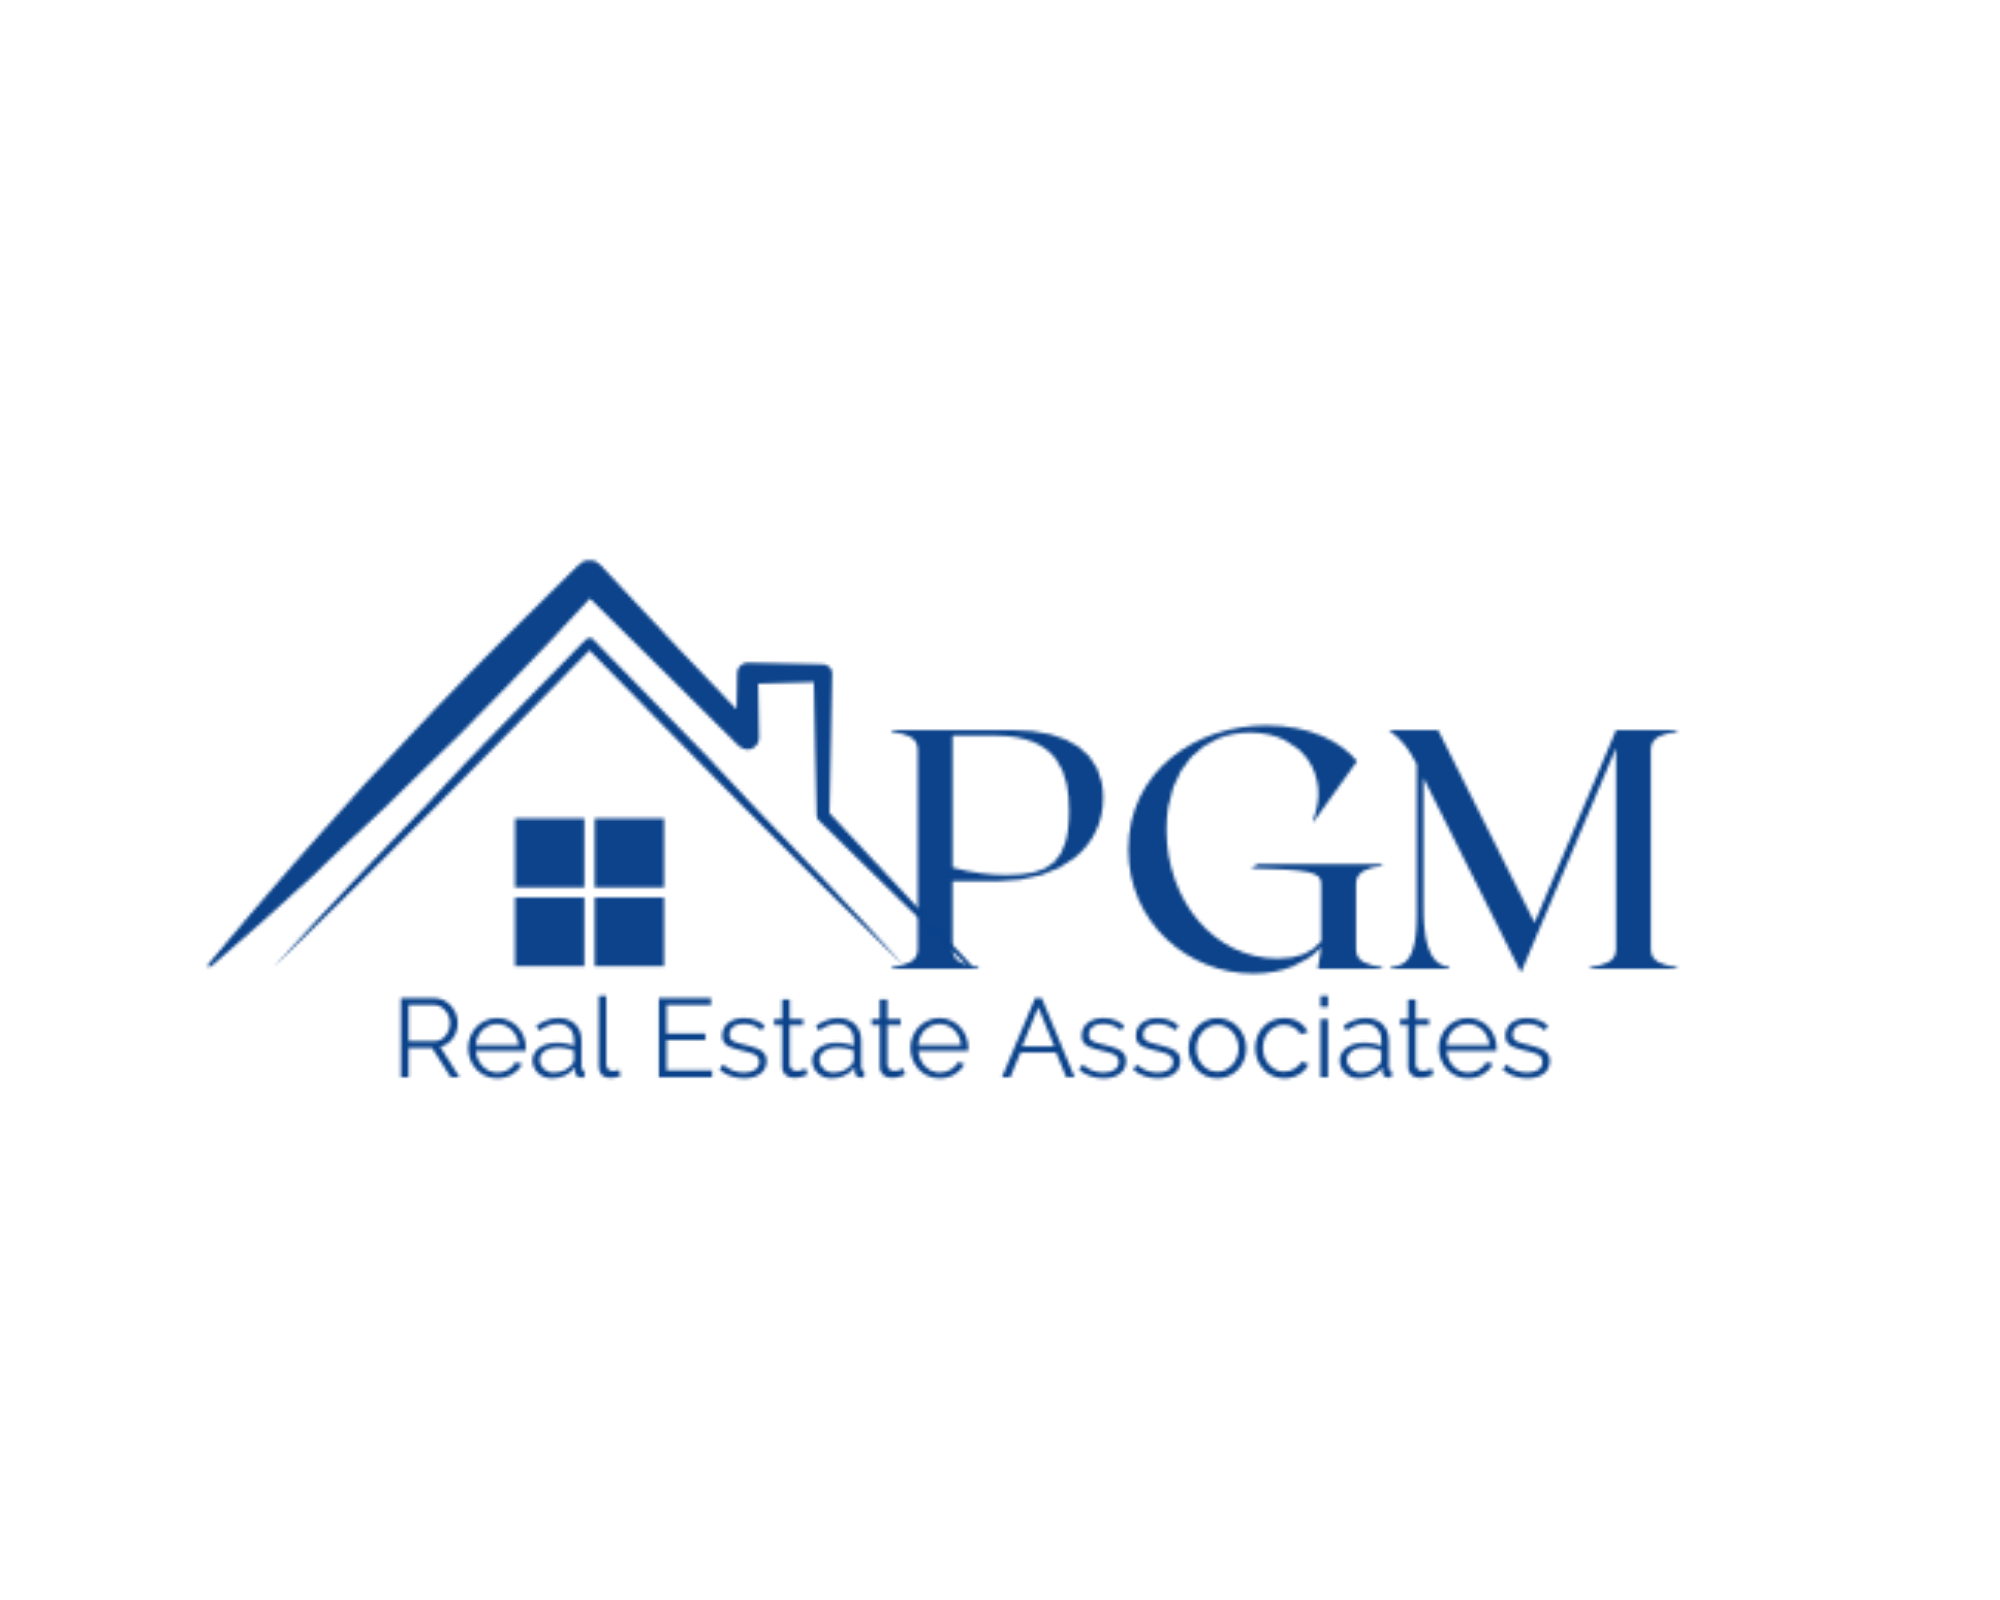 PGM Real Estate Associates logo